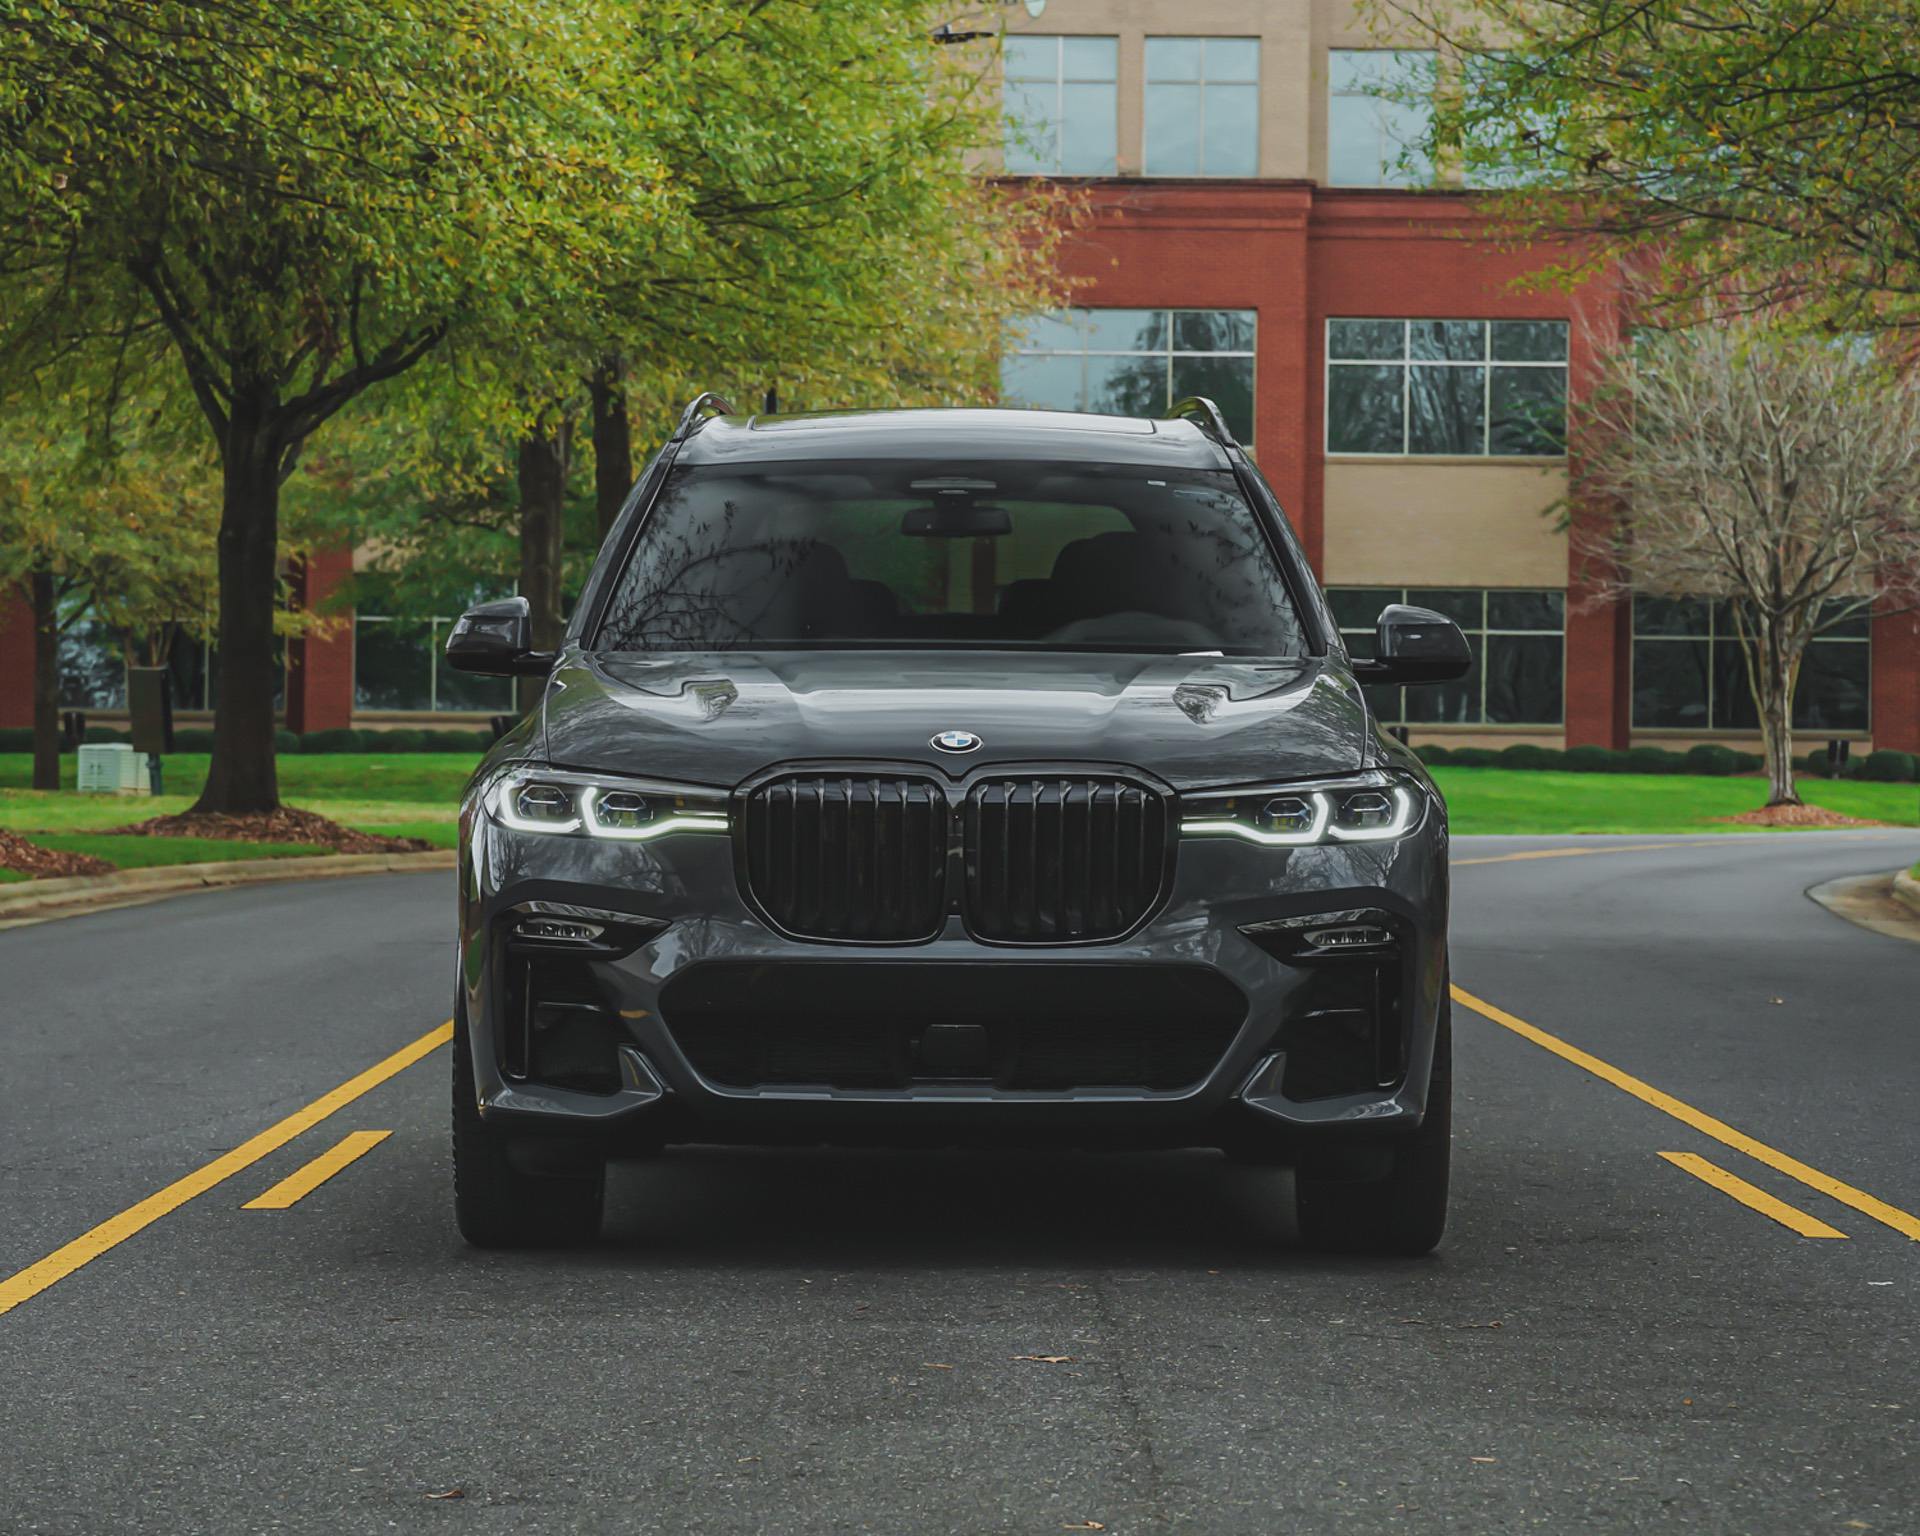 J.D. Power’s top four SUVs to buy in 2021 has three BMWs